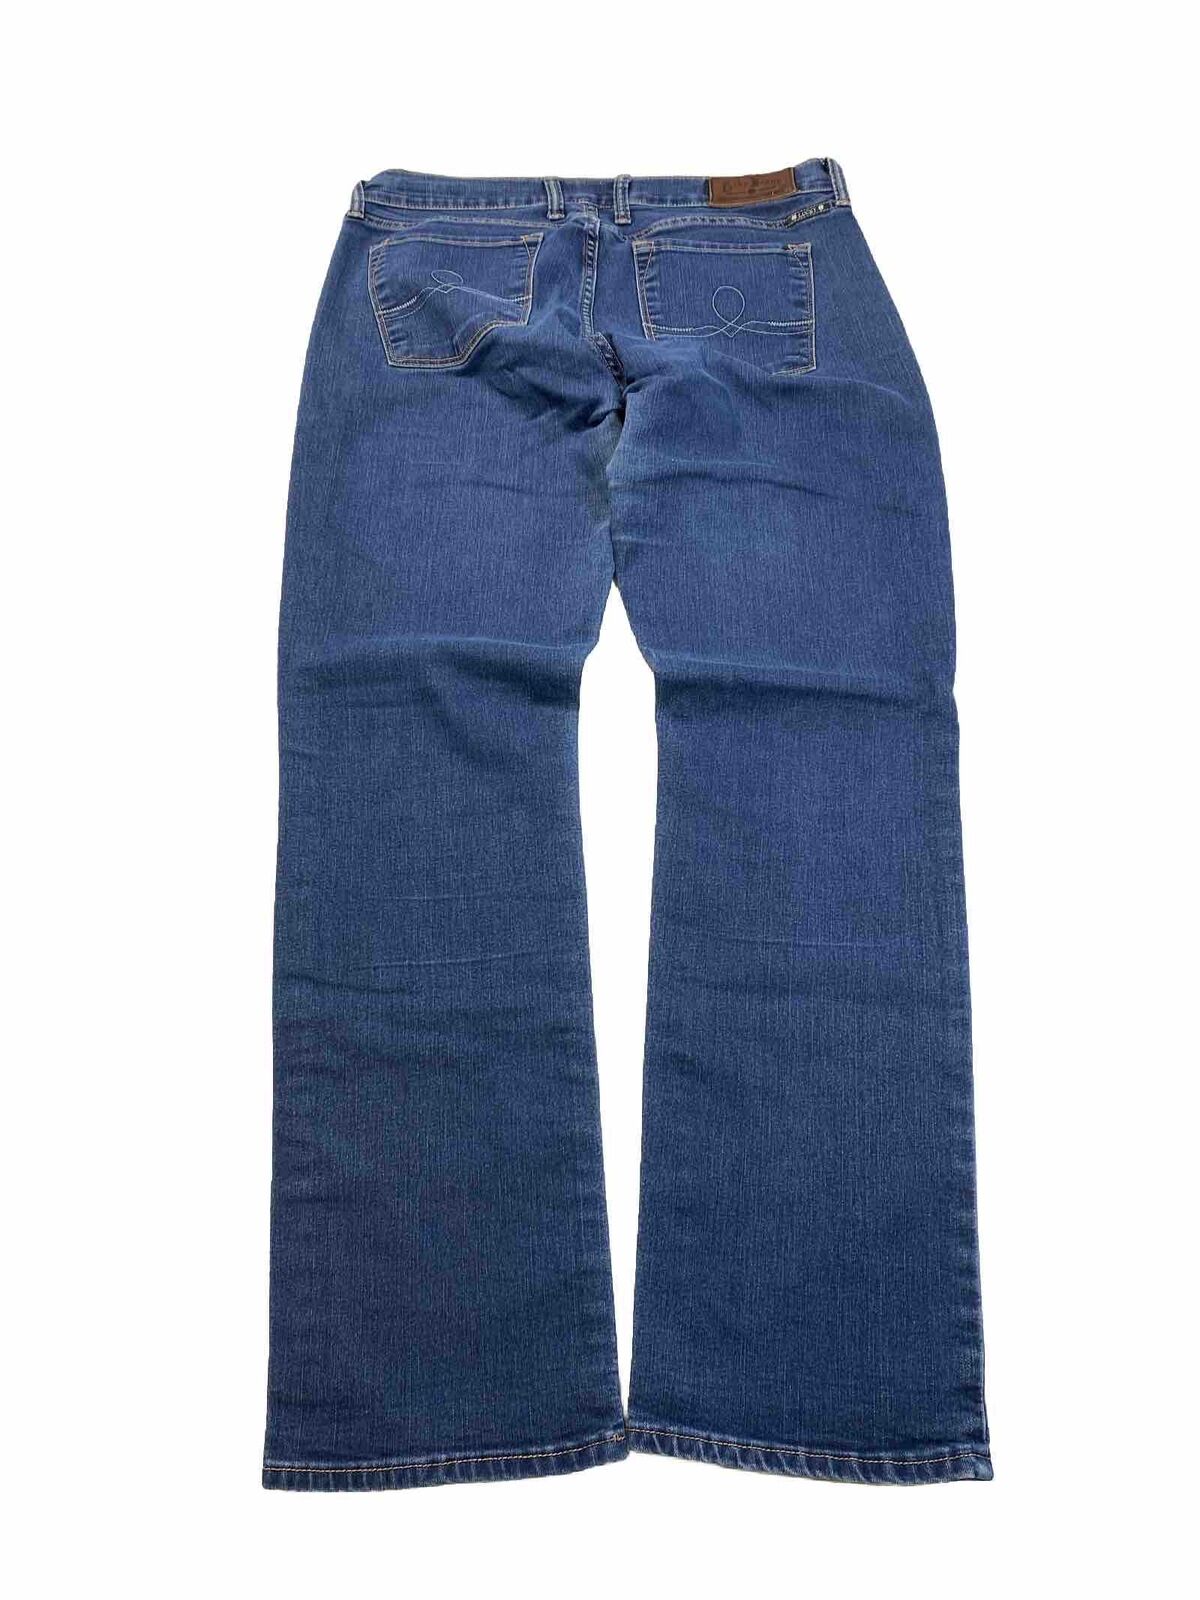 Lucky Brand Women's Medium Wash Sofia Straight Jeans - 12/31 Regular